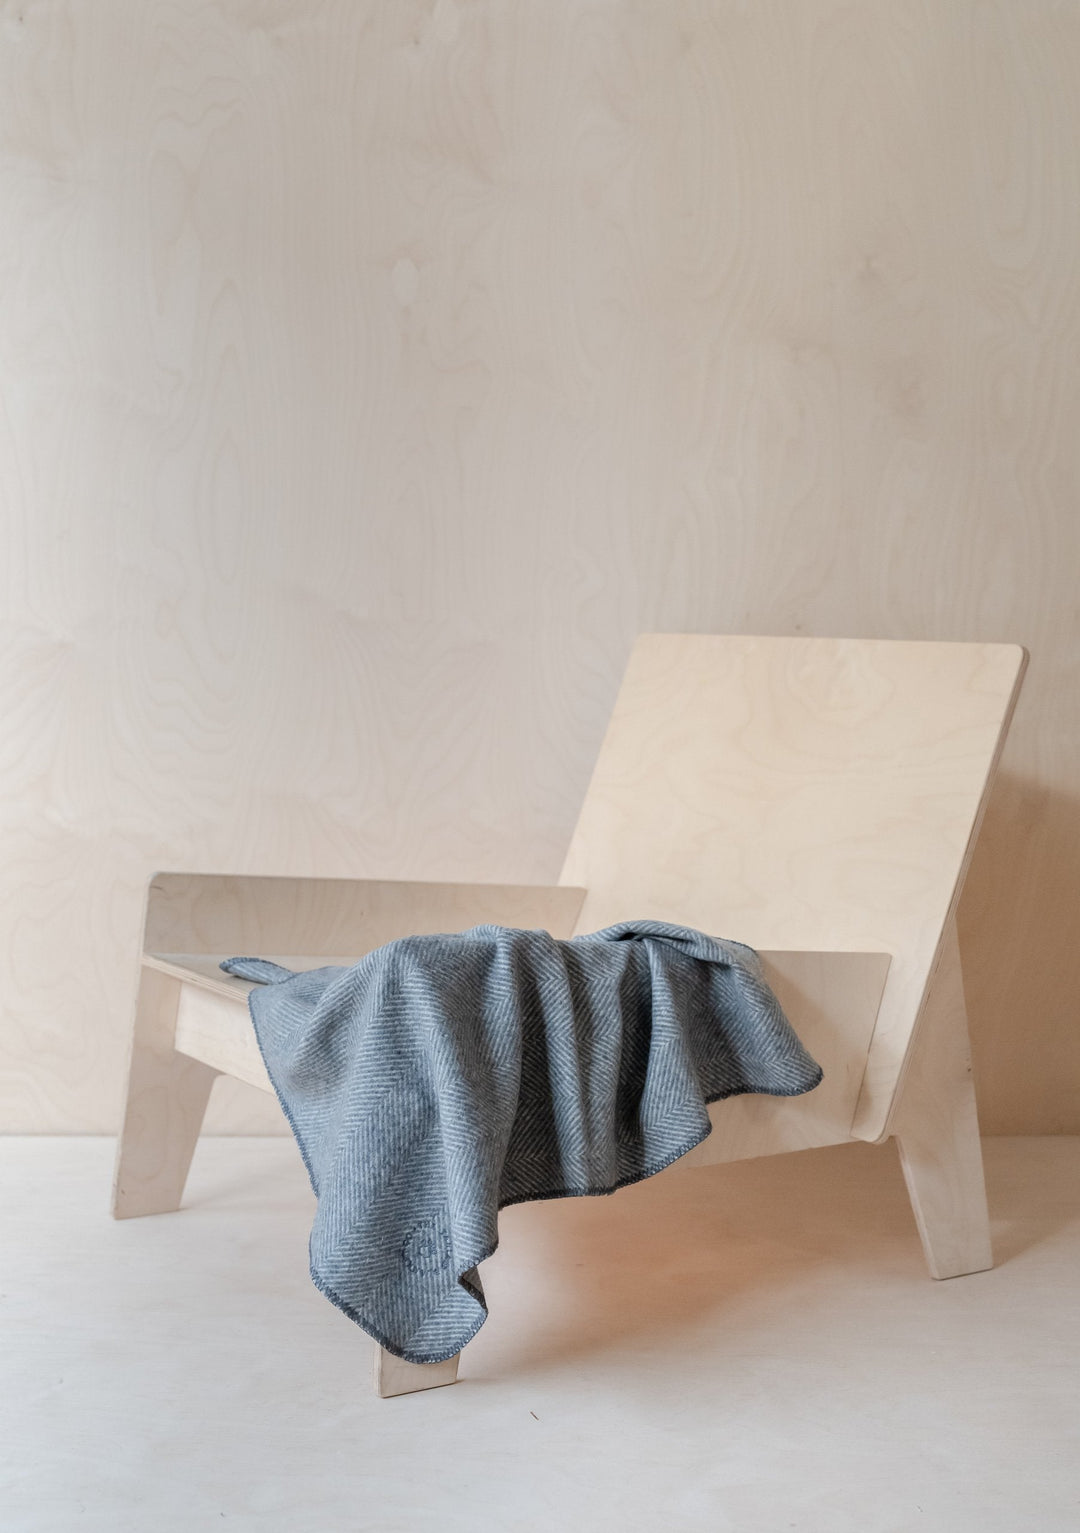 Recycled Wool Small Pet Blanket in Charcoal Herringbone